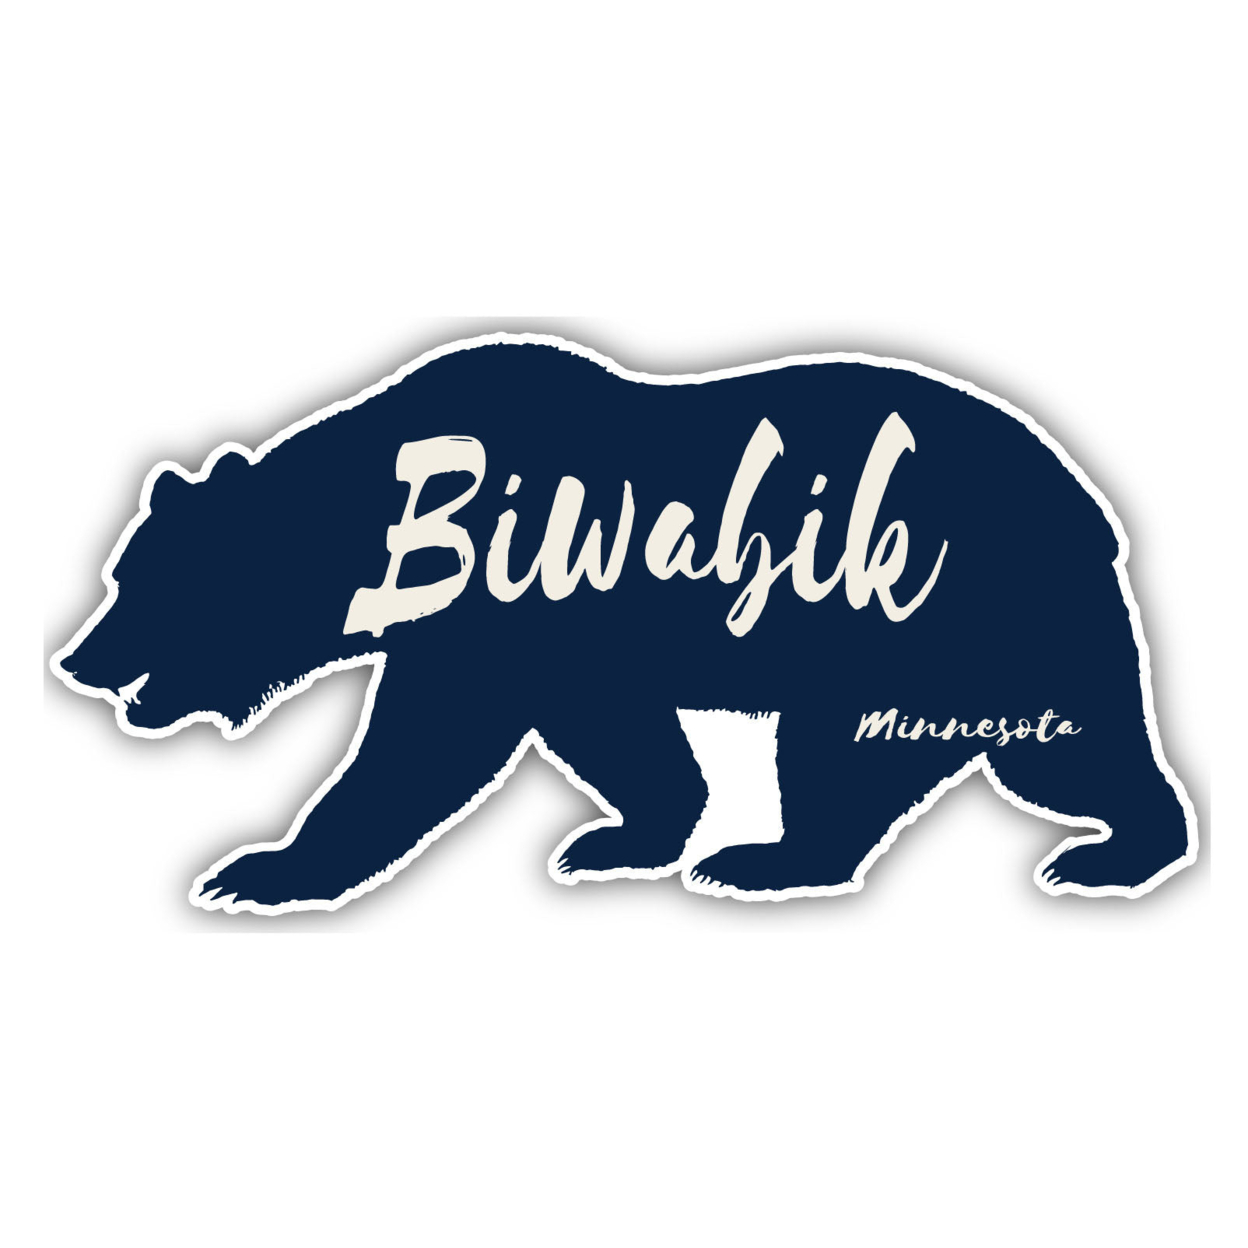 Biwabik Minnesota Souvenir Decorative Stickers (Choose Theme And Size) - 4-Pack, 12-Inch, Tent